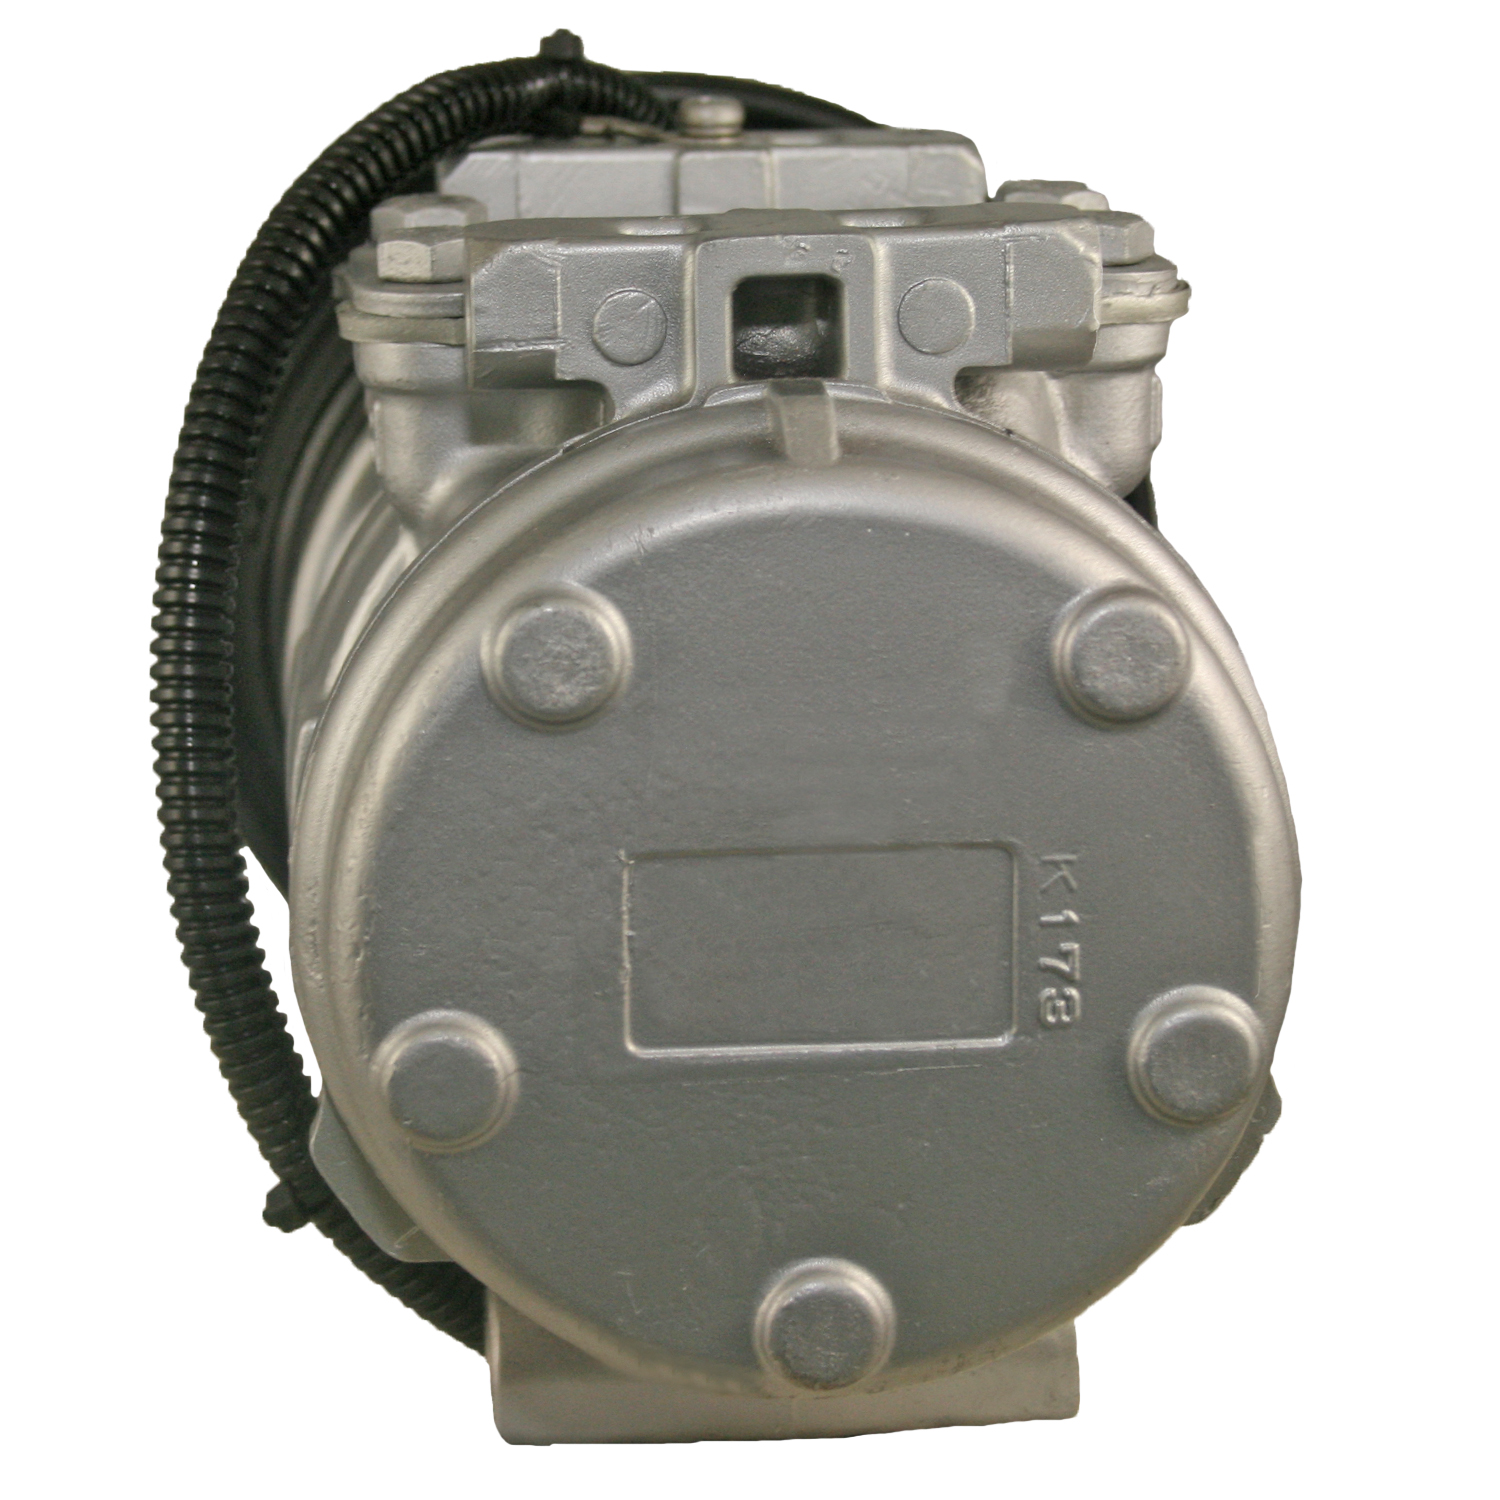 TCW Compressor 31100.103 Remanufactured Product Image field_60b6a13a6e67c